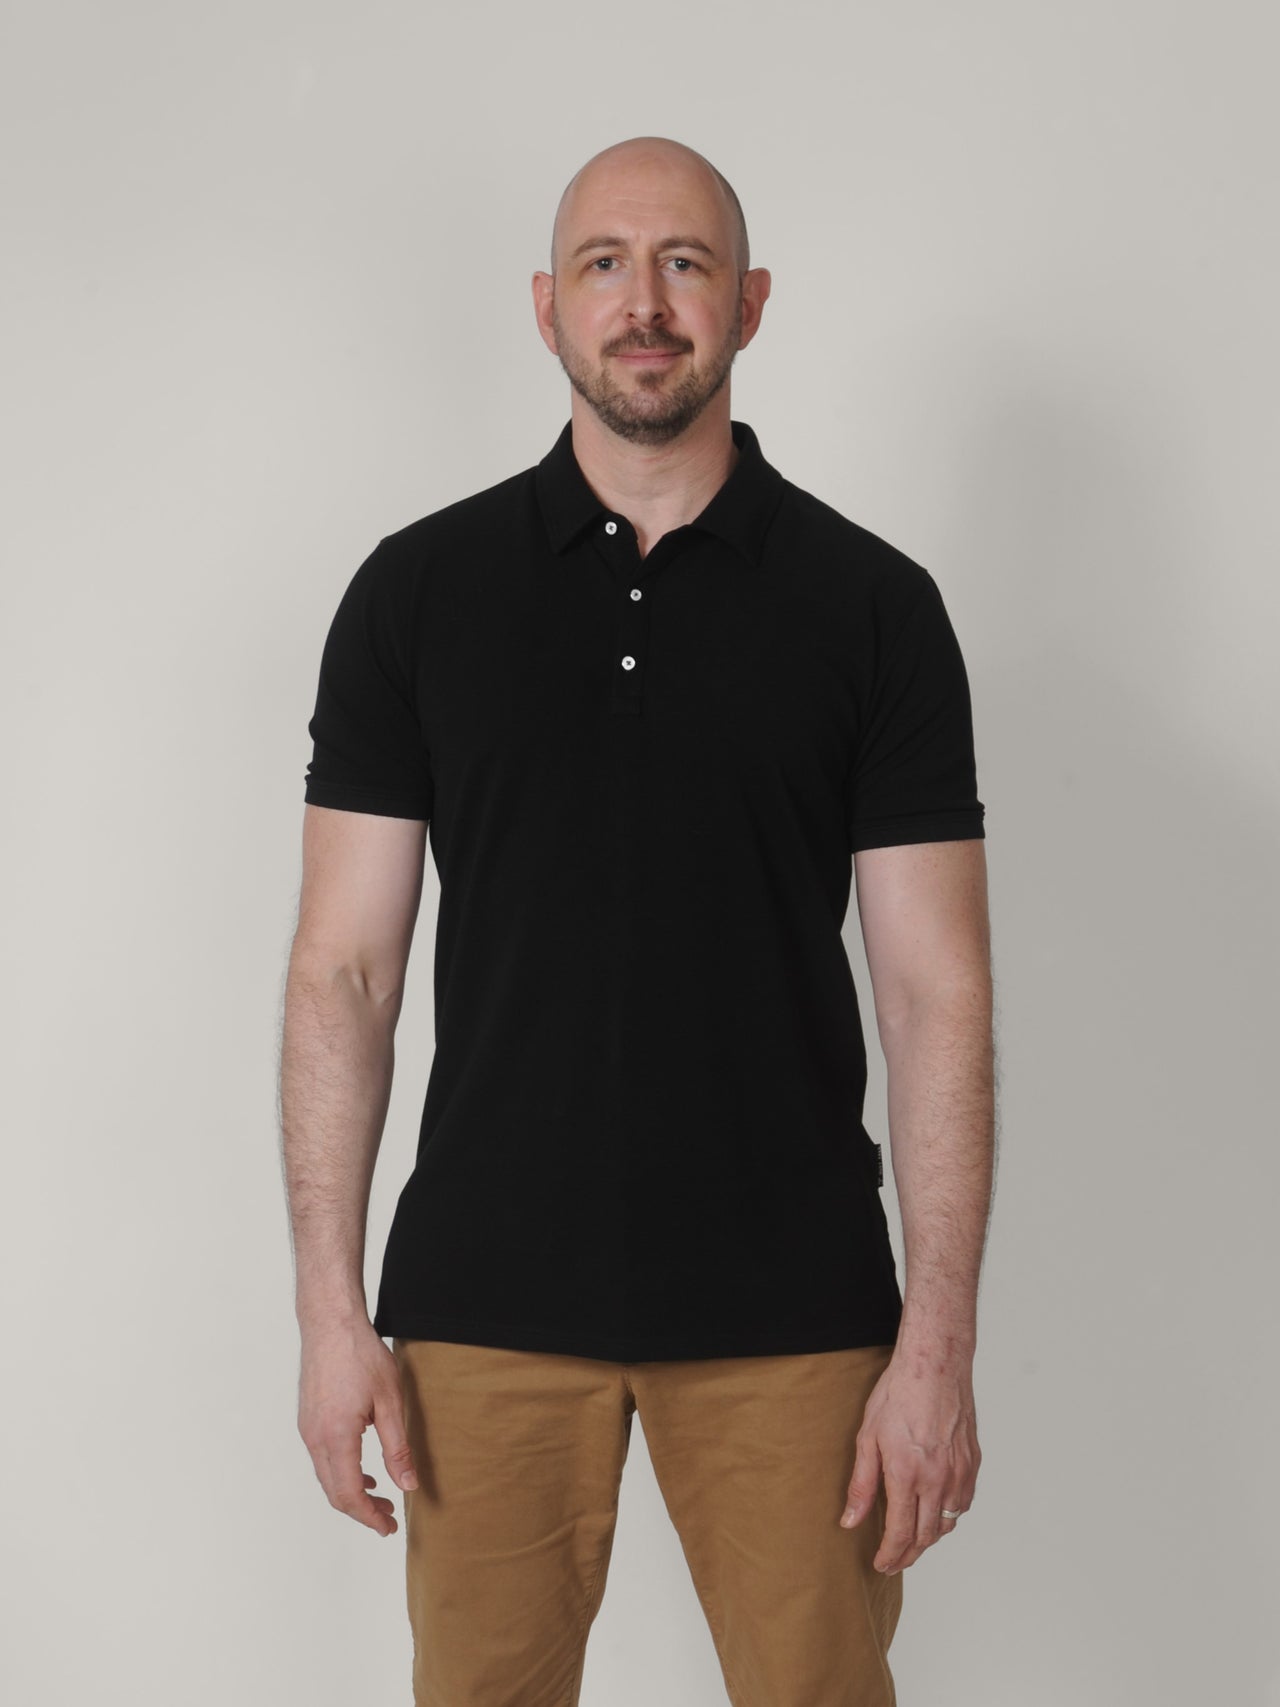 A tall slim guy wearing a black XL tall polo shirt.